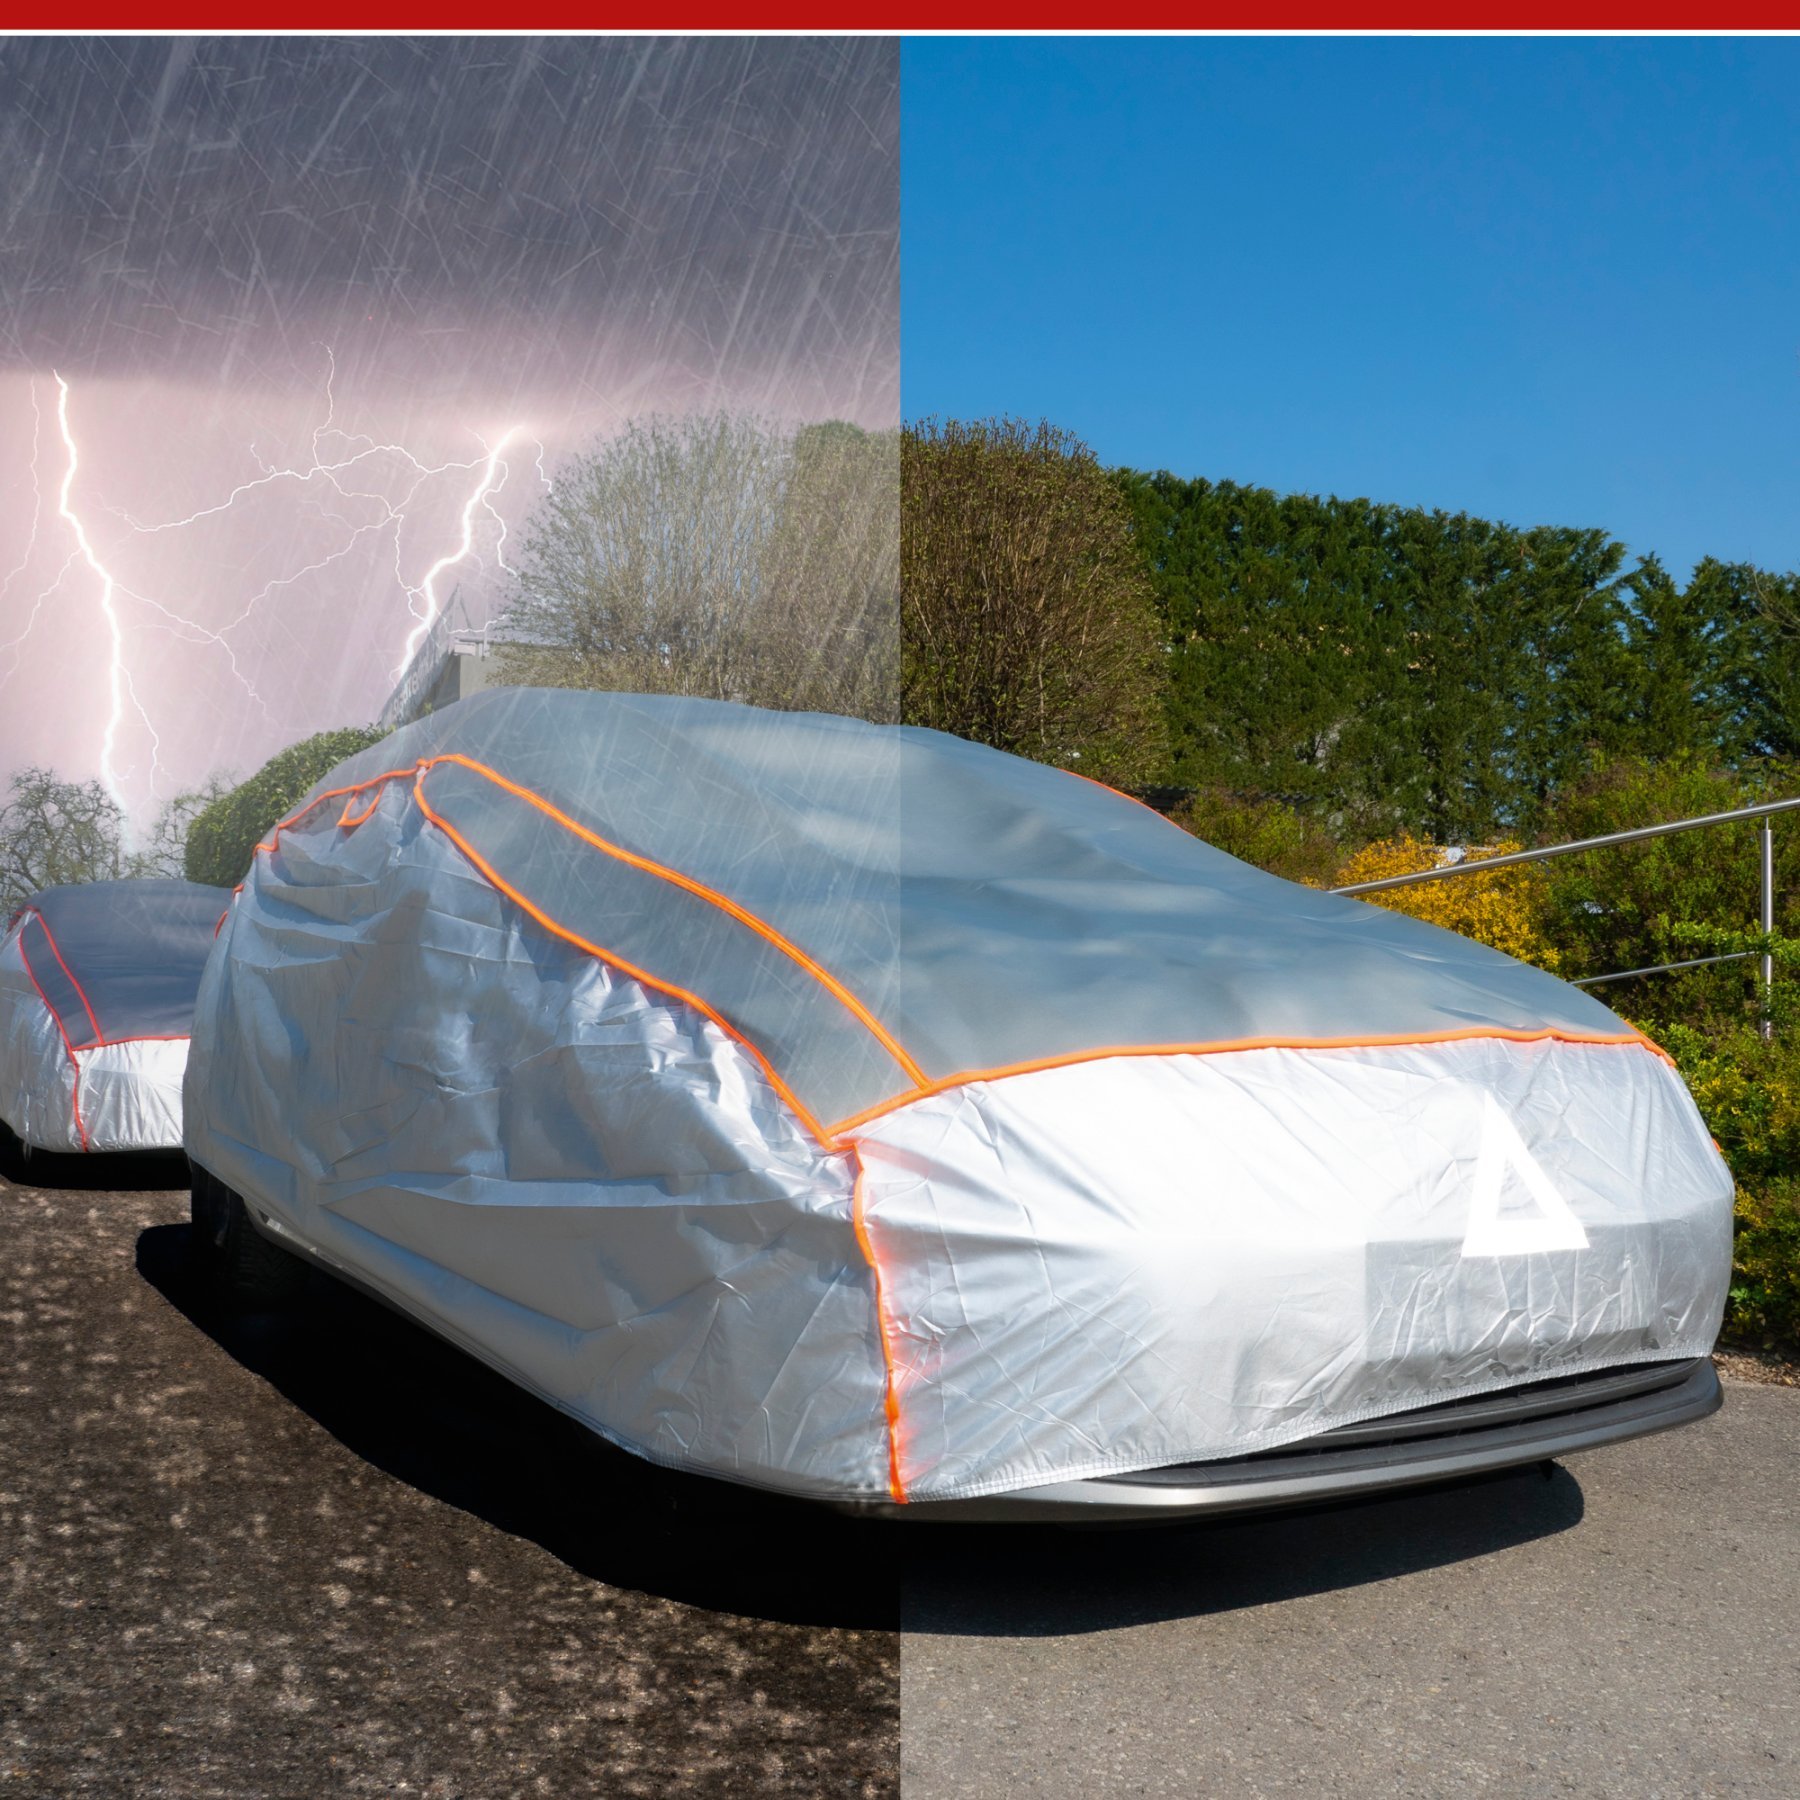 Car hail protection tarpaulin Perma Protect size XL